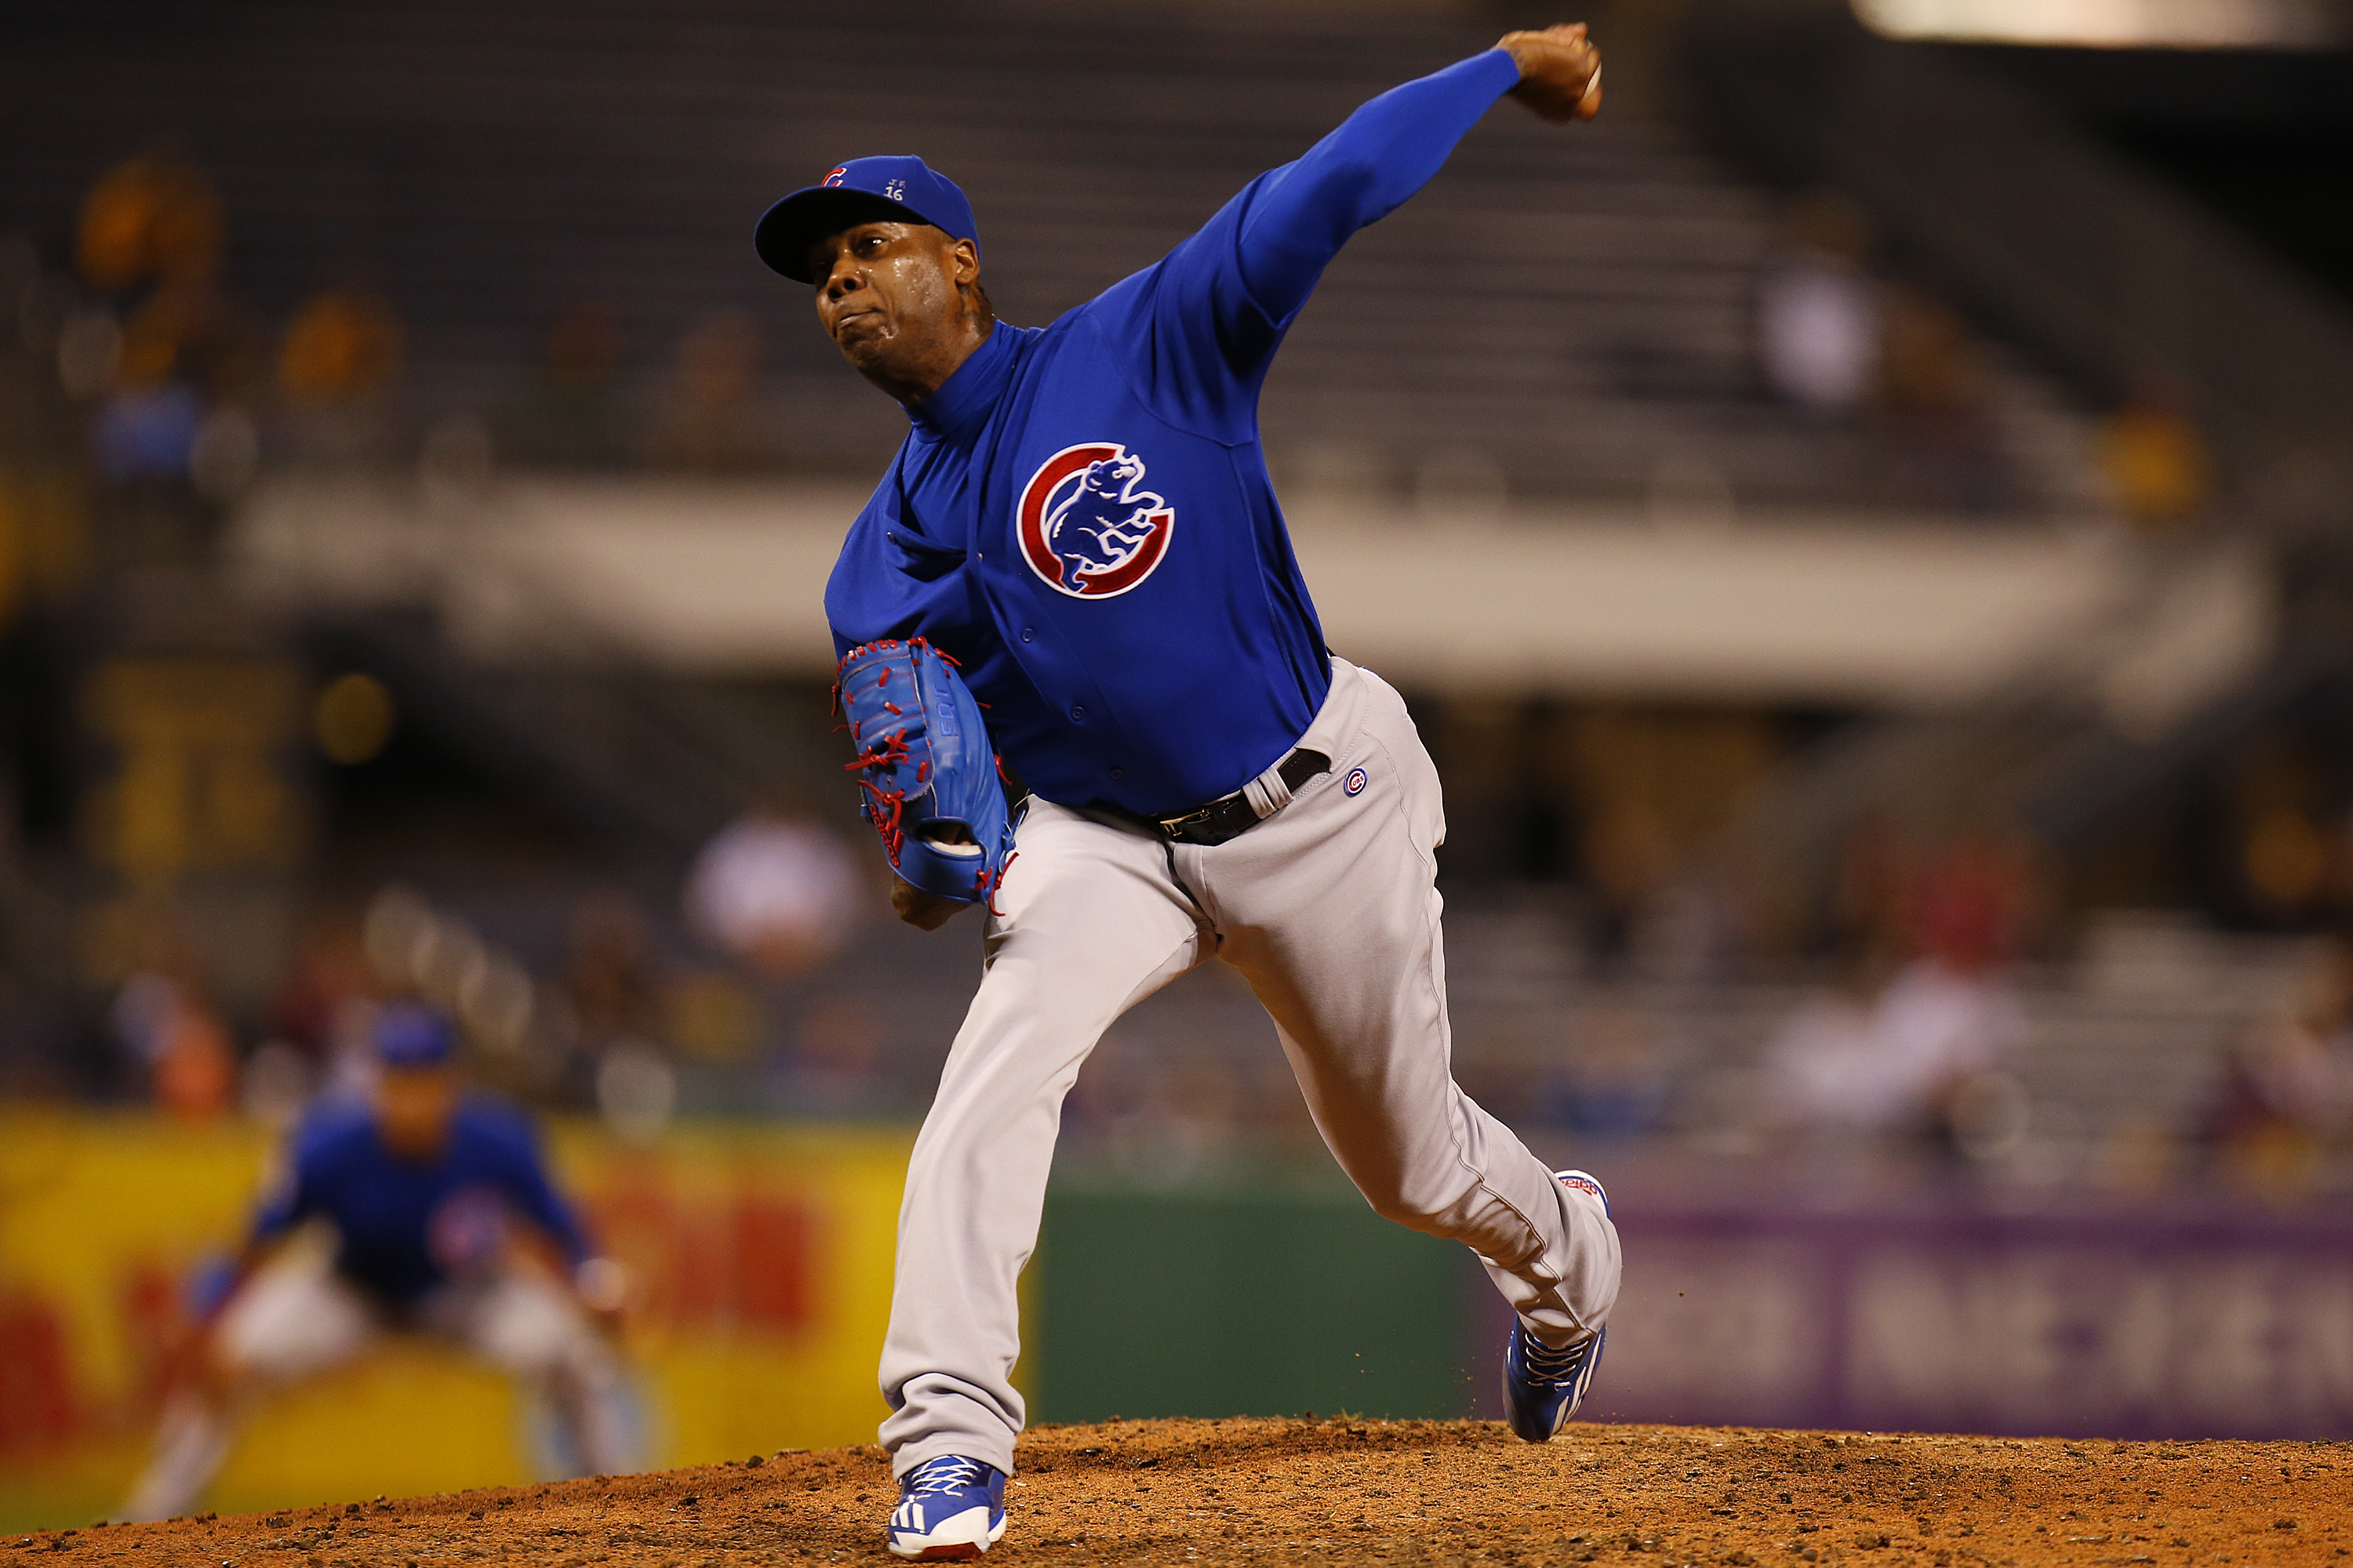 Chicago Cubs pitcher Aroldis Chapman's problematic past